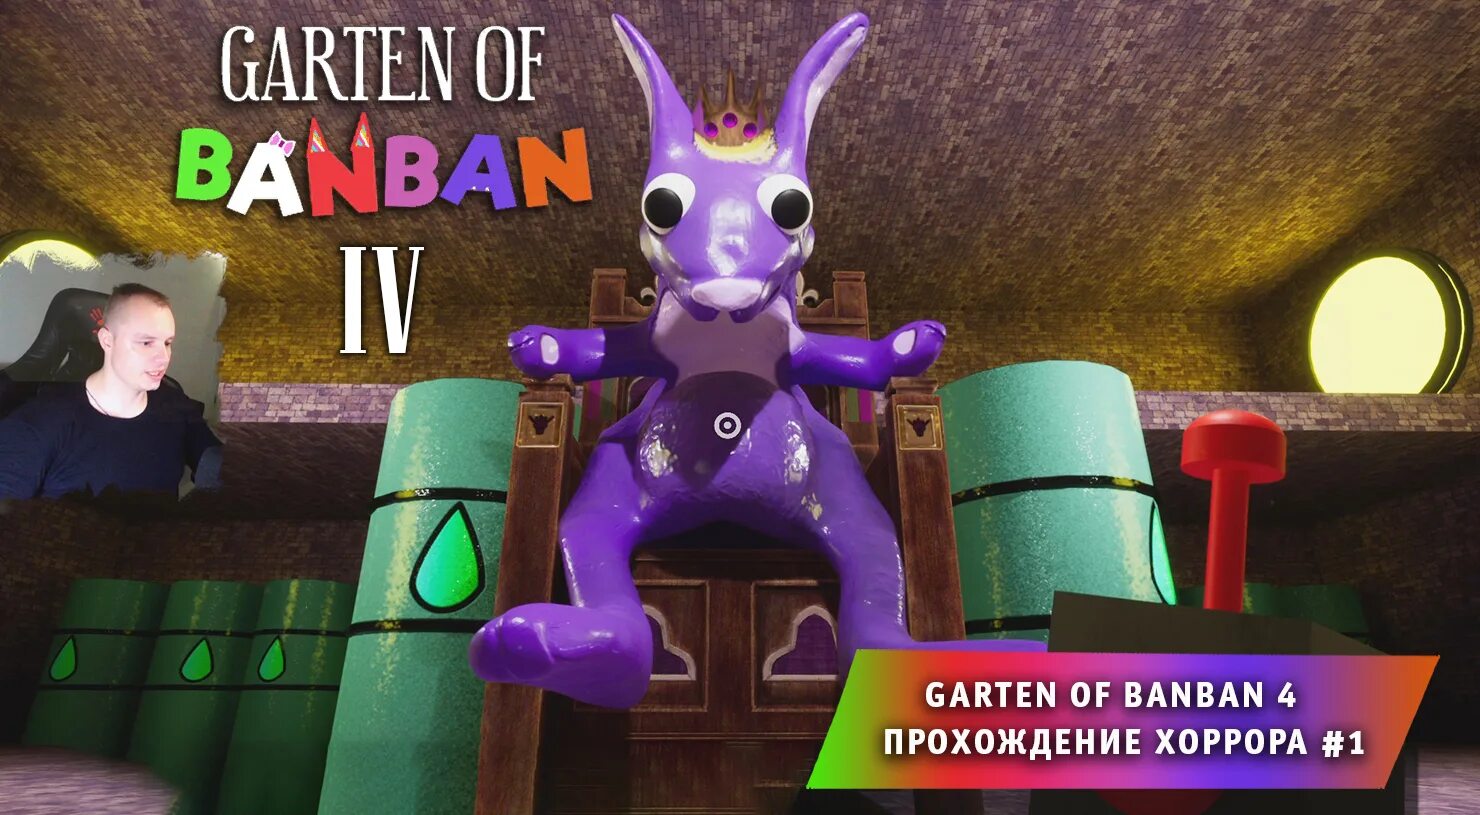 Картен оф бан бан. Банбан 4. Garden of ban ban 4. Гарден оф Банбан Банбан. Garden of Banban игра.